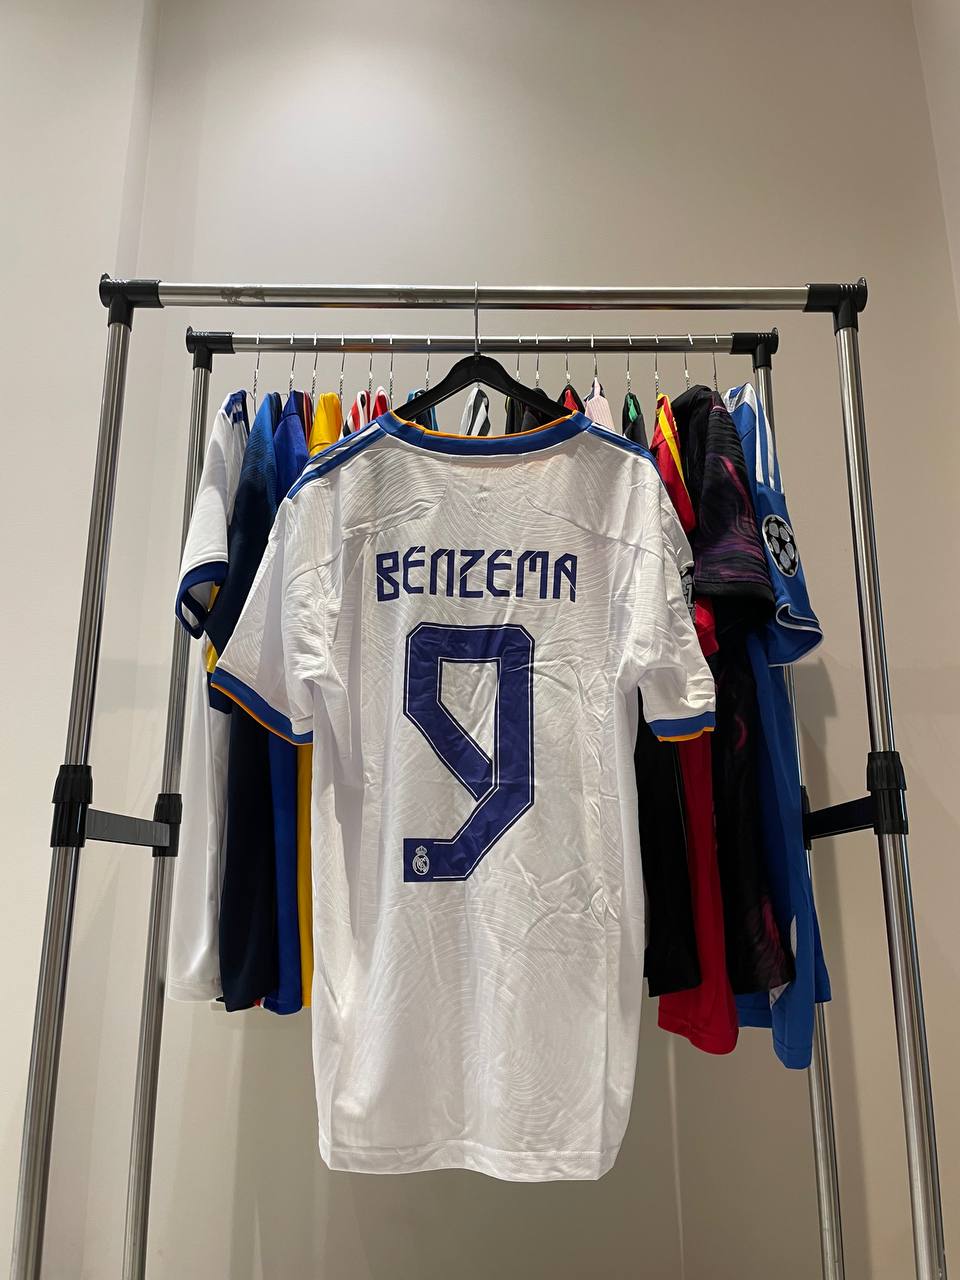 Benzema x Real Madrid